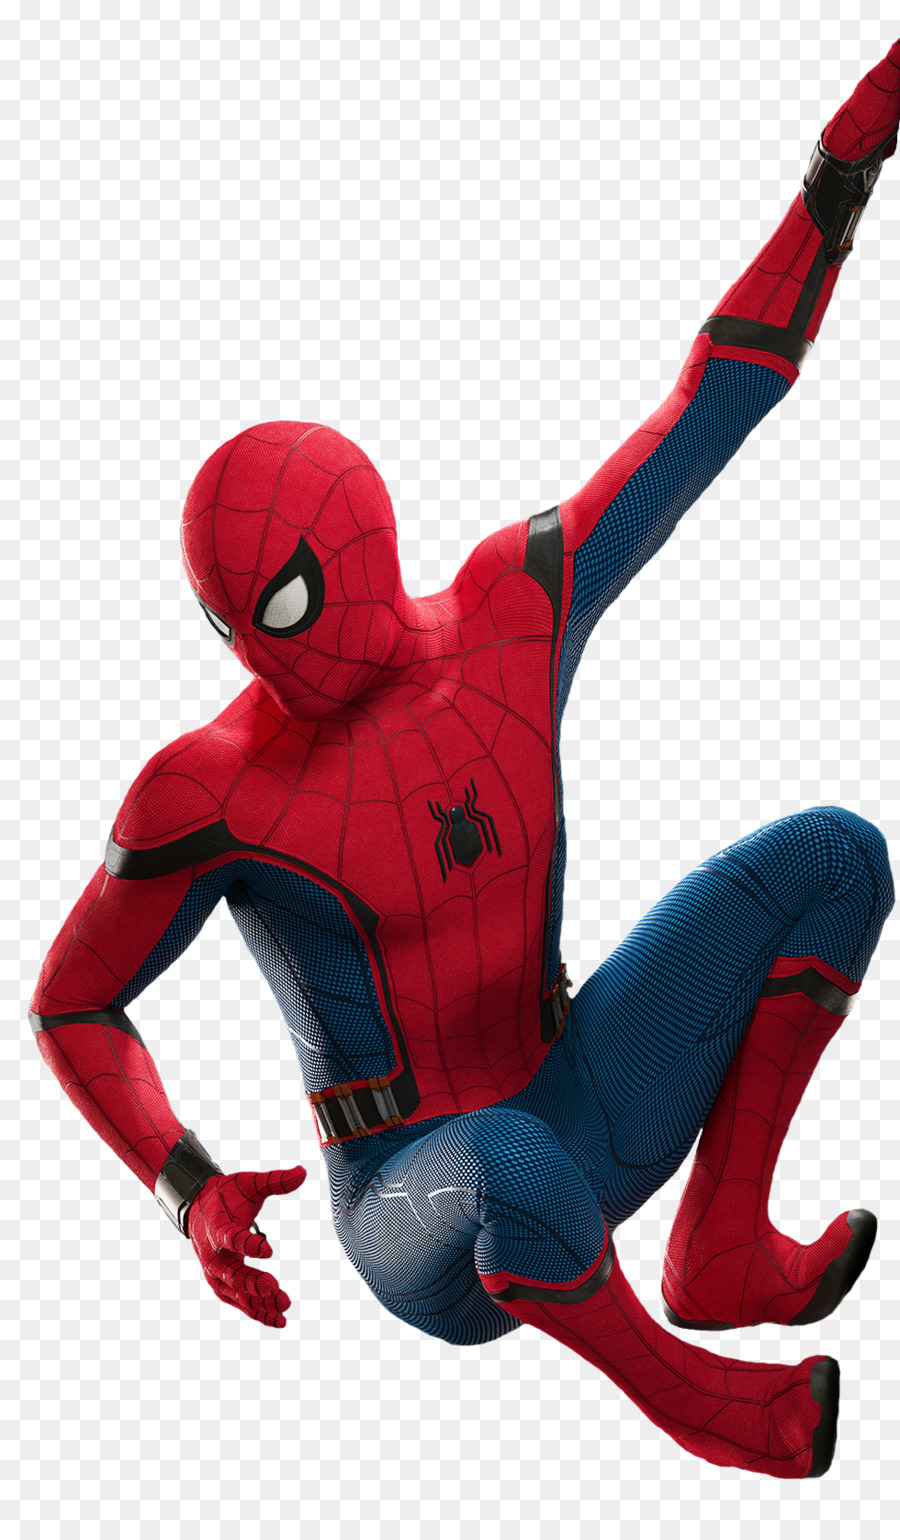 Spider-Man: Homecoming film series Marvel Cinematic Universe Spider-Man: Homecoming film series Marvel Studios - spider-man png download - 980*1666 - Free Transparent Spiderman png Download.